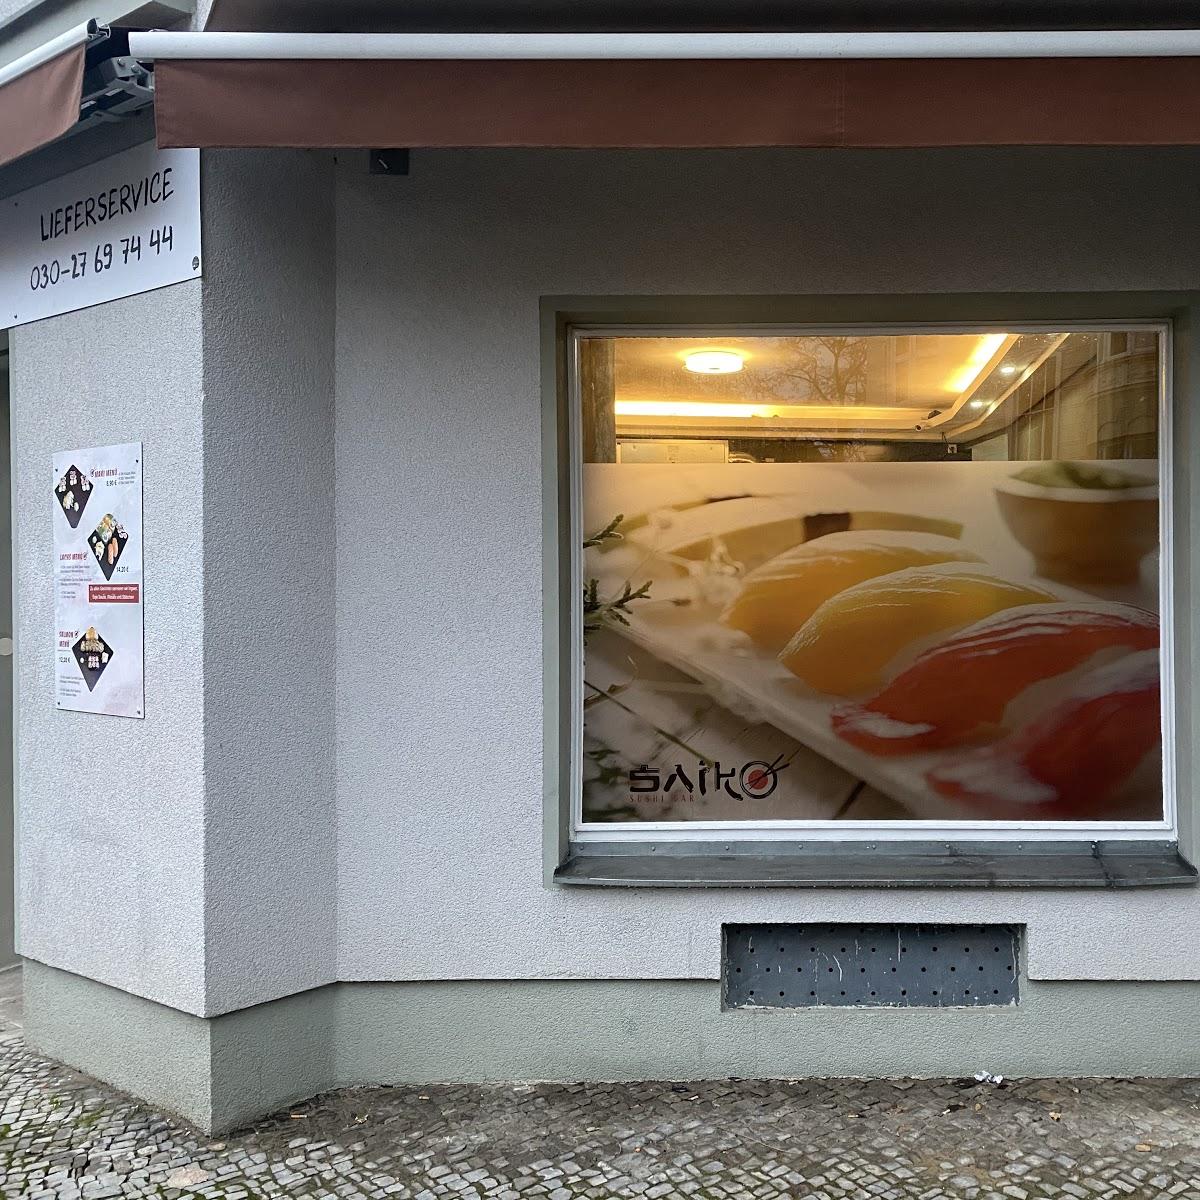 Restaurant "Saiko Sushi" in Berlin